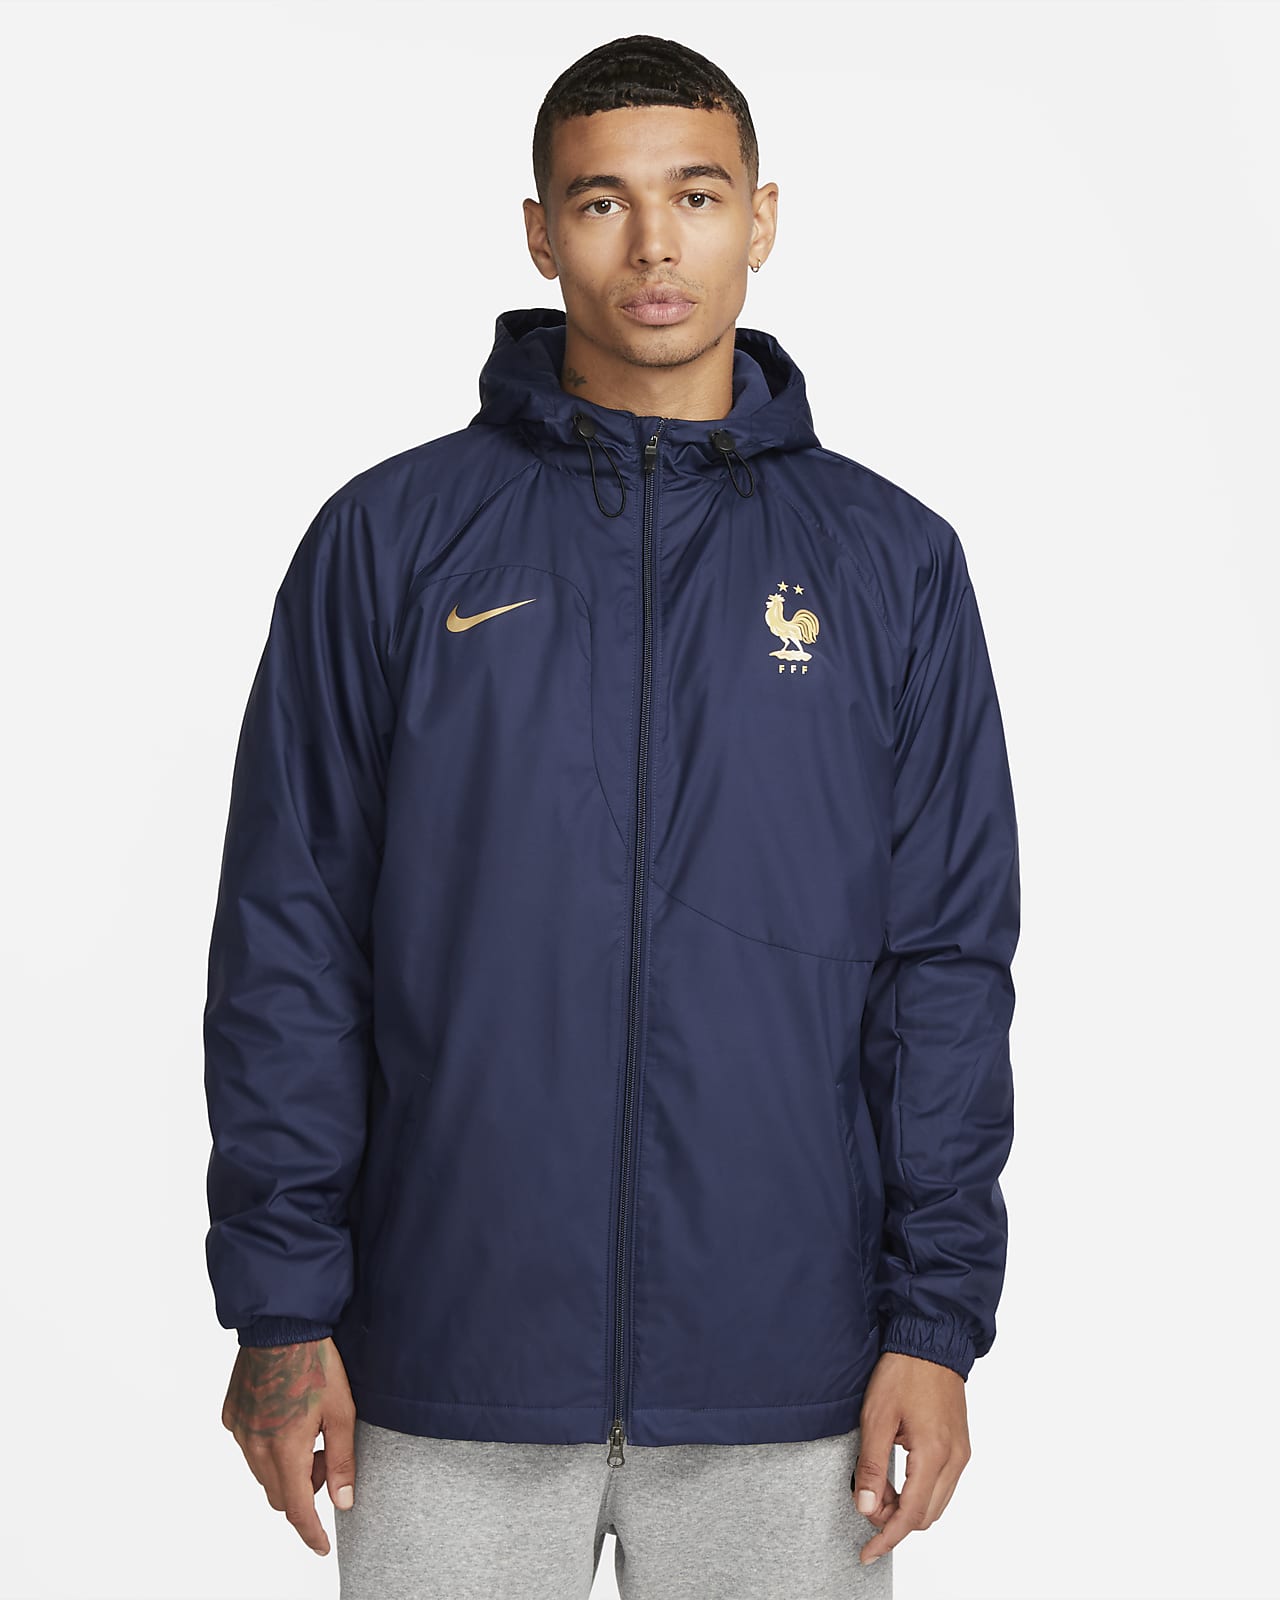 FFF Strike Men's Nike Dri-FIT Hooded Football Jacket